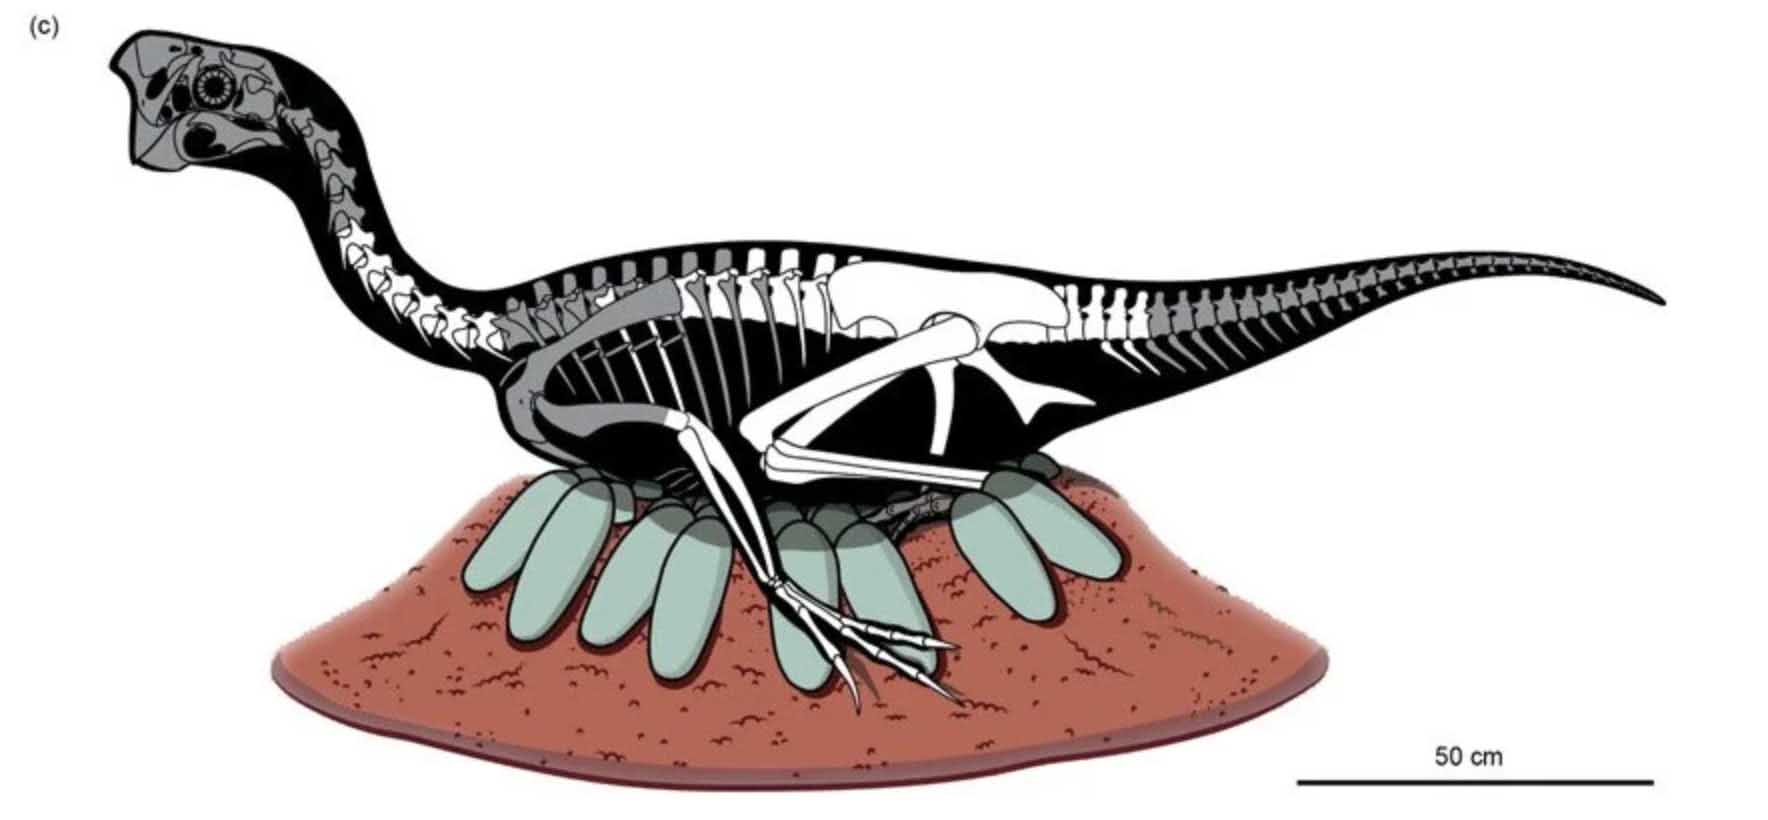 Incredibly preserved dinosaur embryo found inside fossilized egg 3